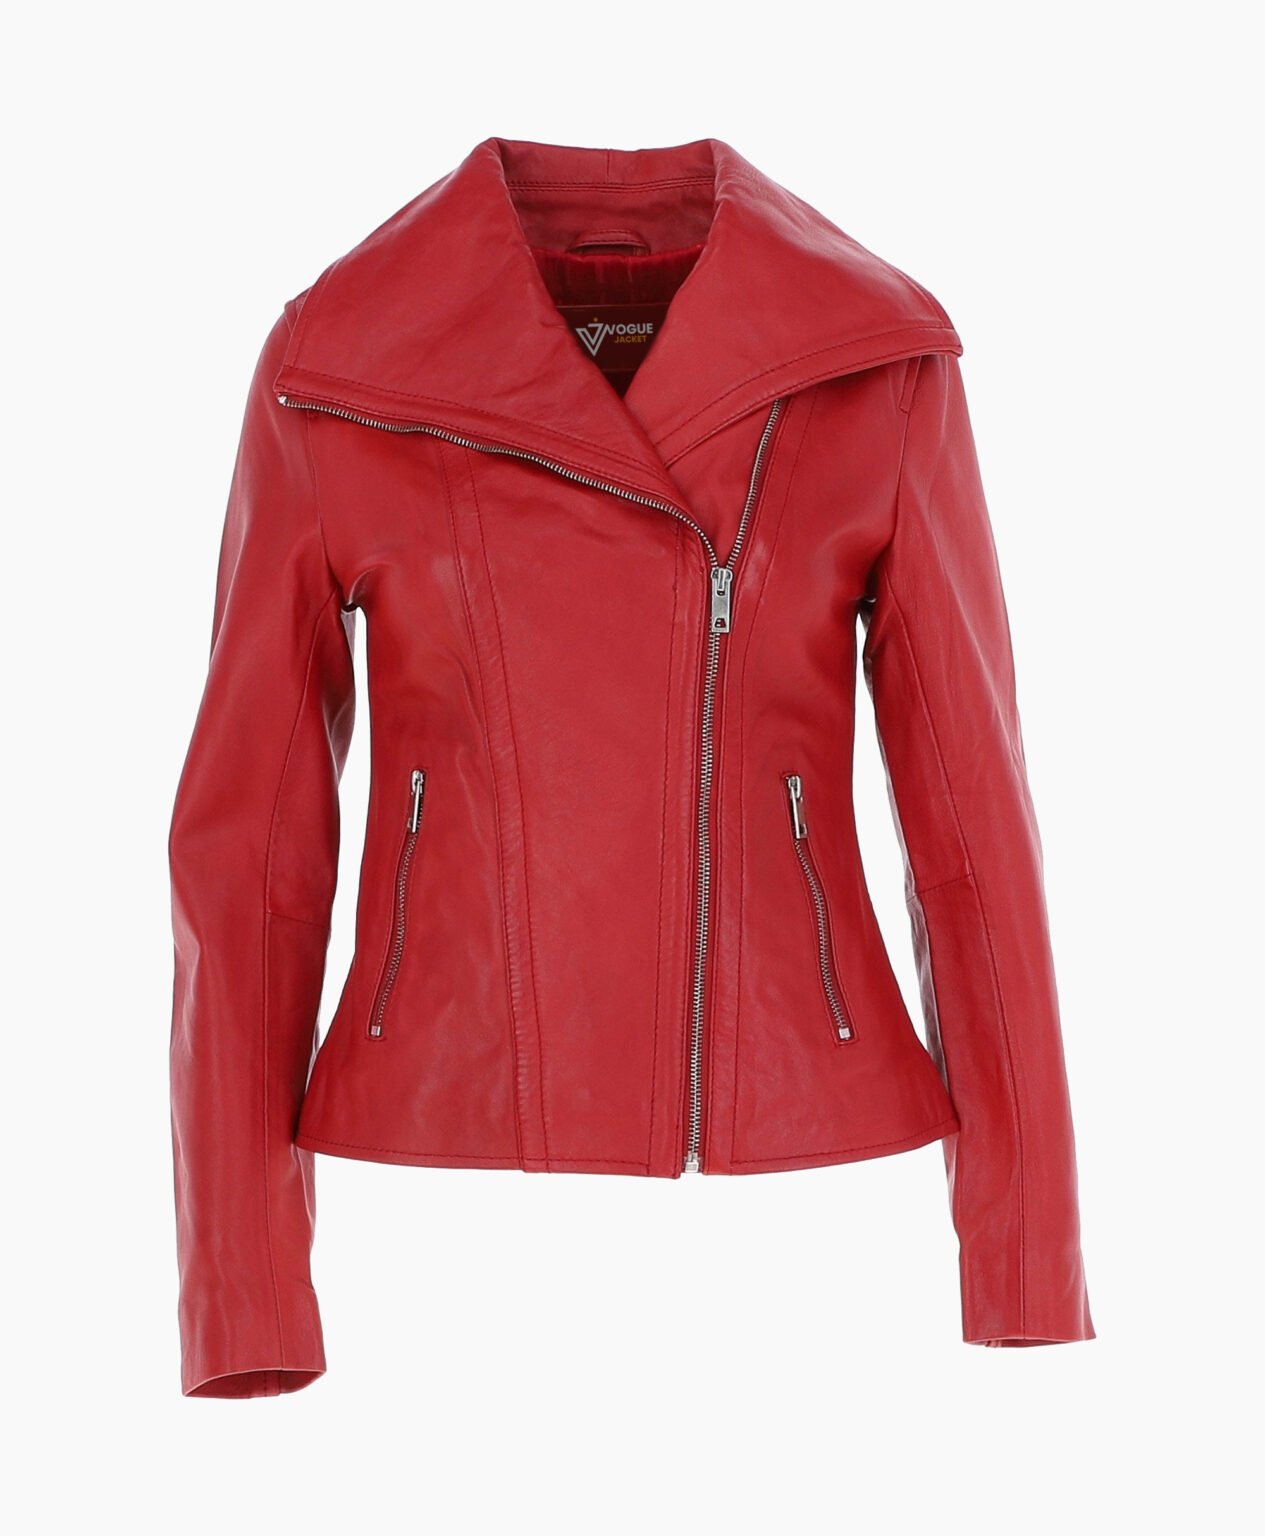 vogue-jacket-leather-jacket-fashion-collar-red-shelby-image200